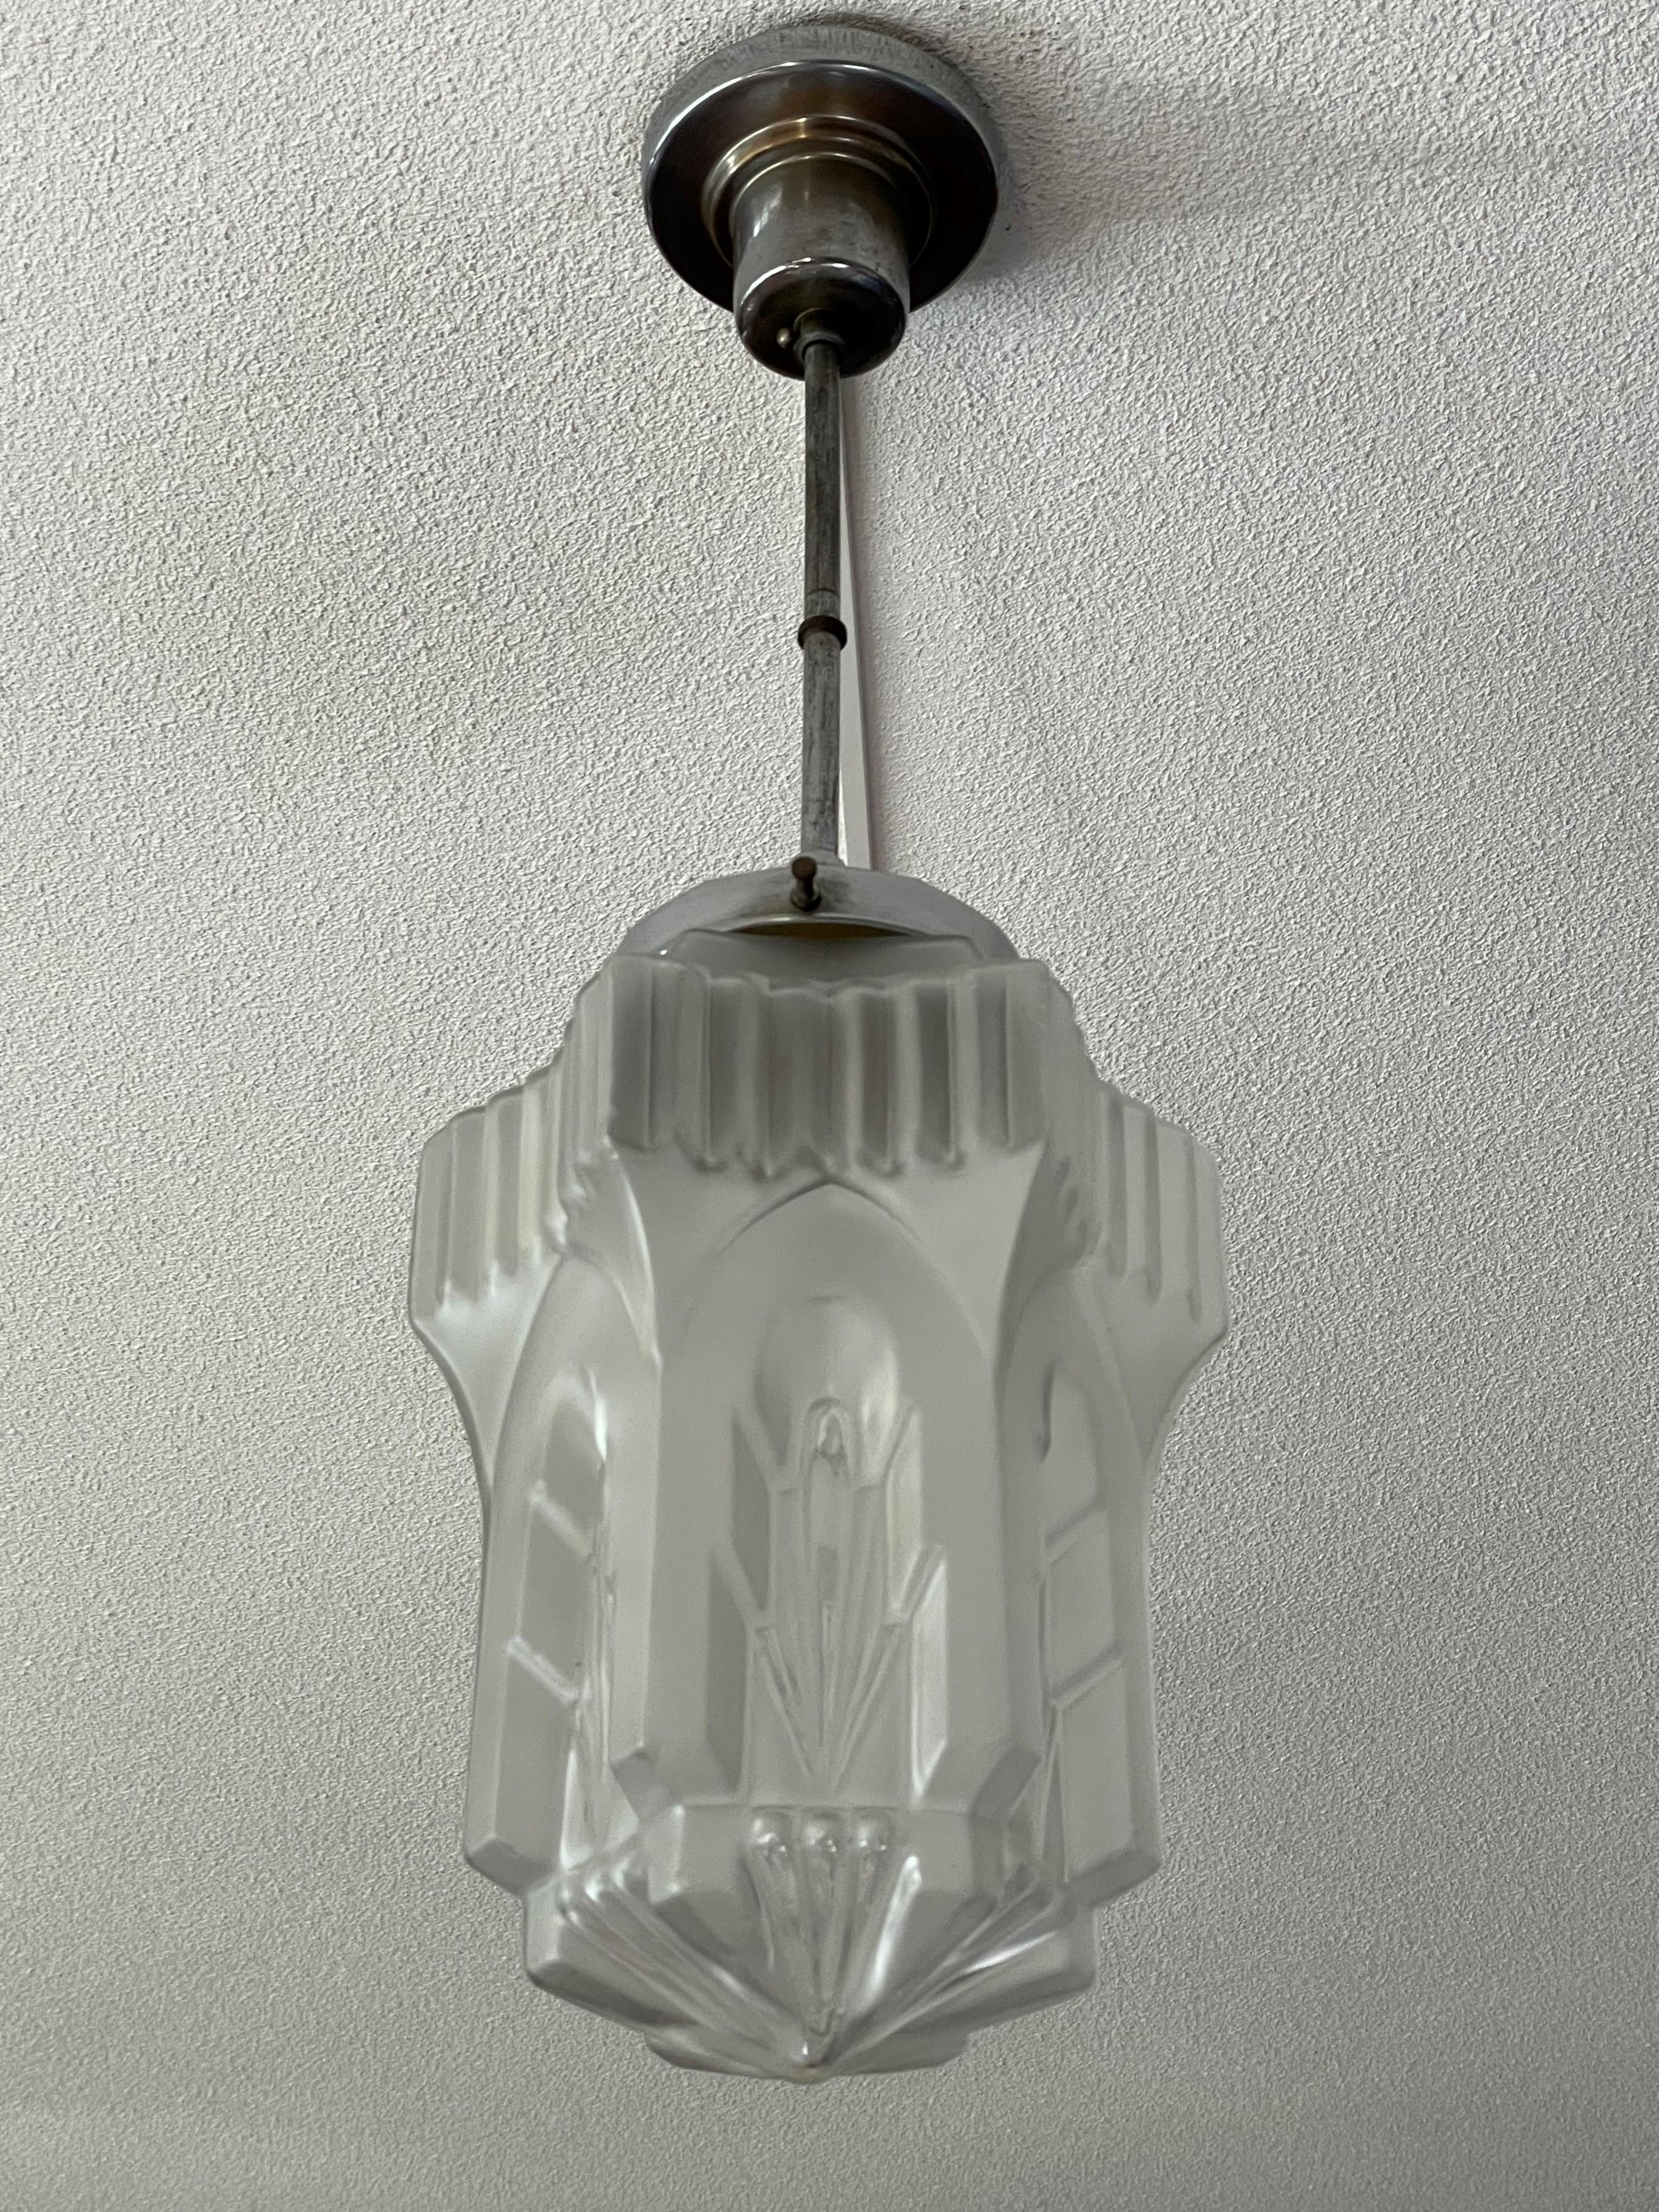 Stunning French, Antique Gothic Art Deco Design, Chrome Metal Pendant Light 1920 For Sale 2